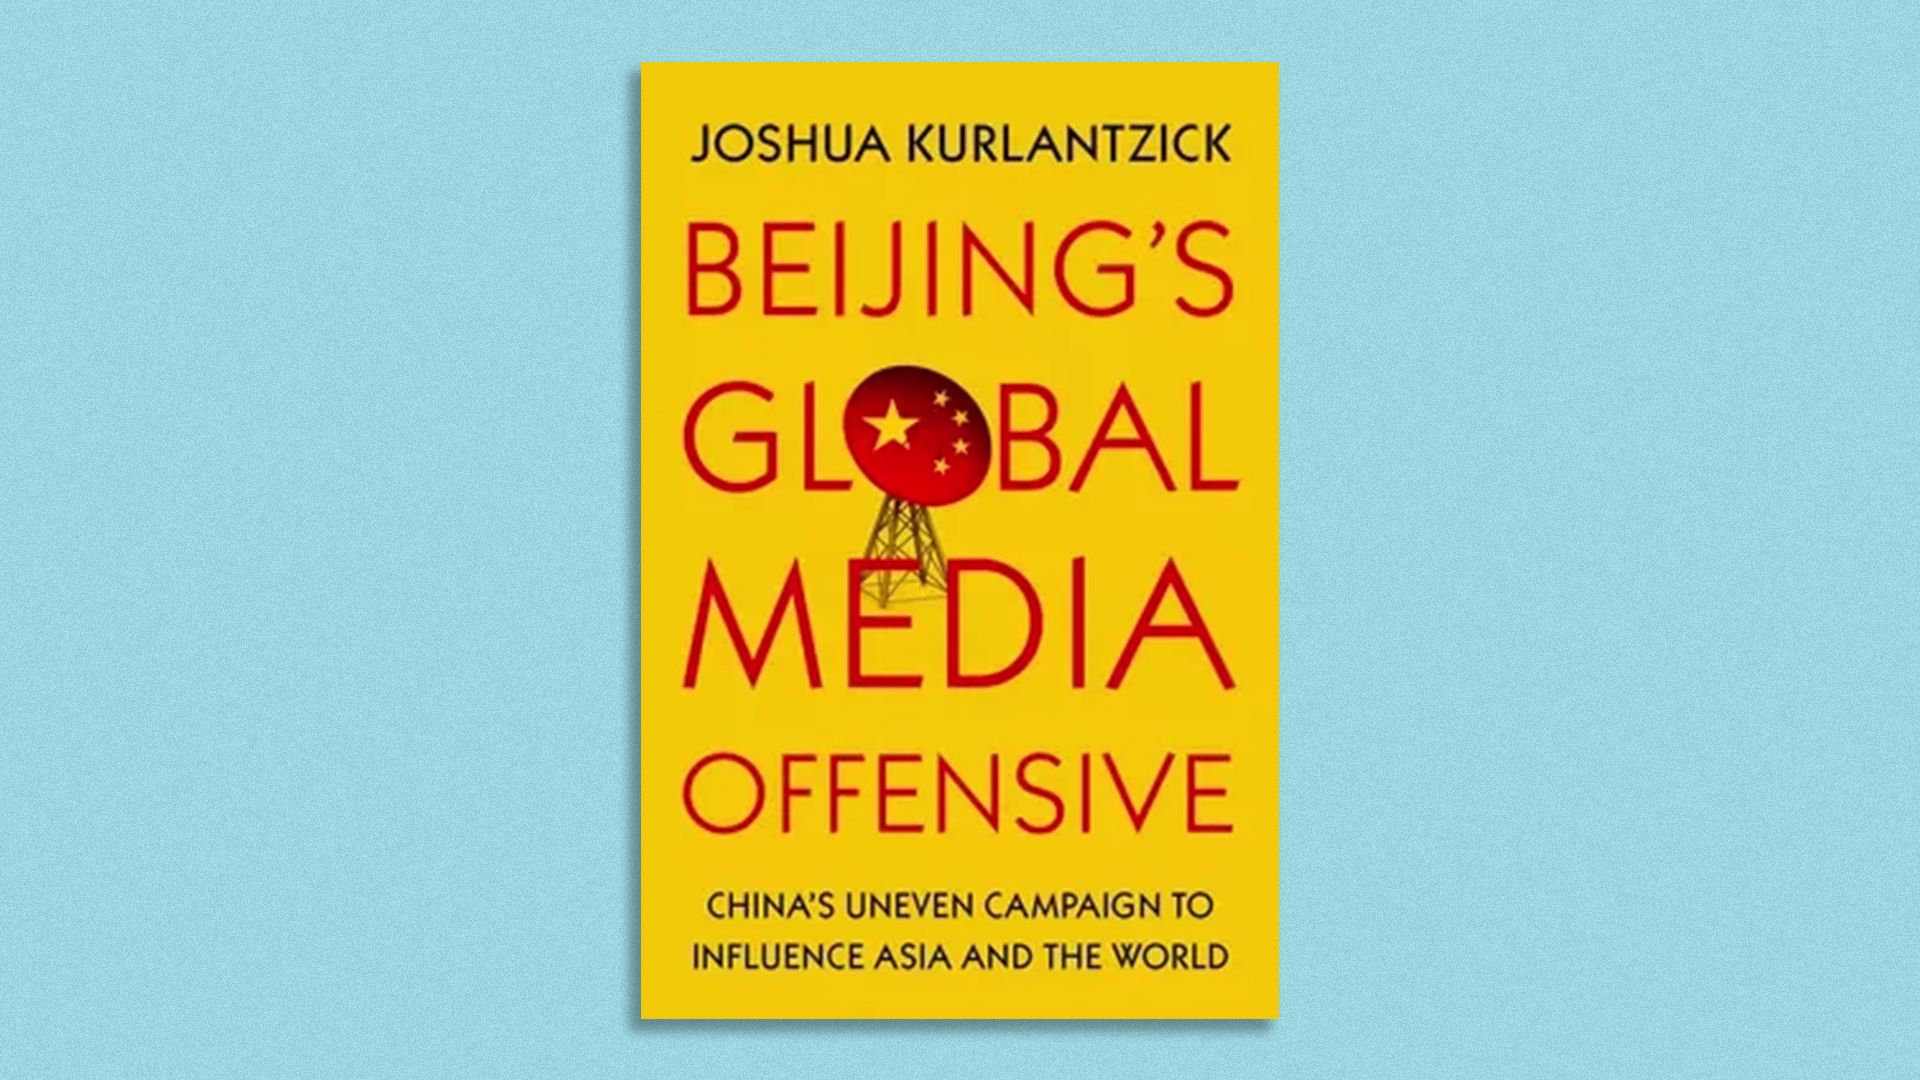 Book cover image of Beijing's Global Media Offensive, by Joshua Kurlantzick